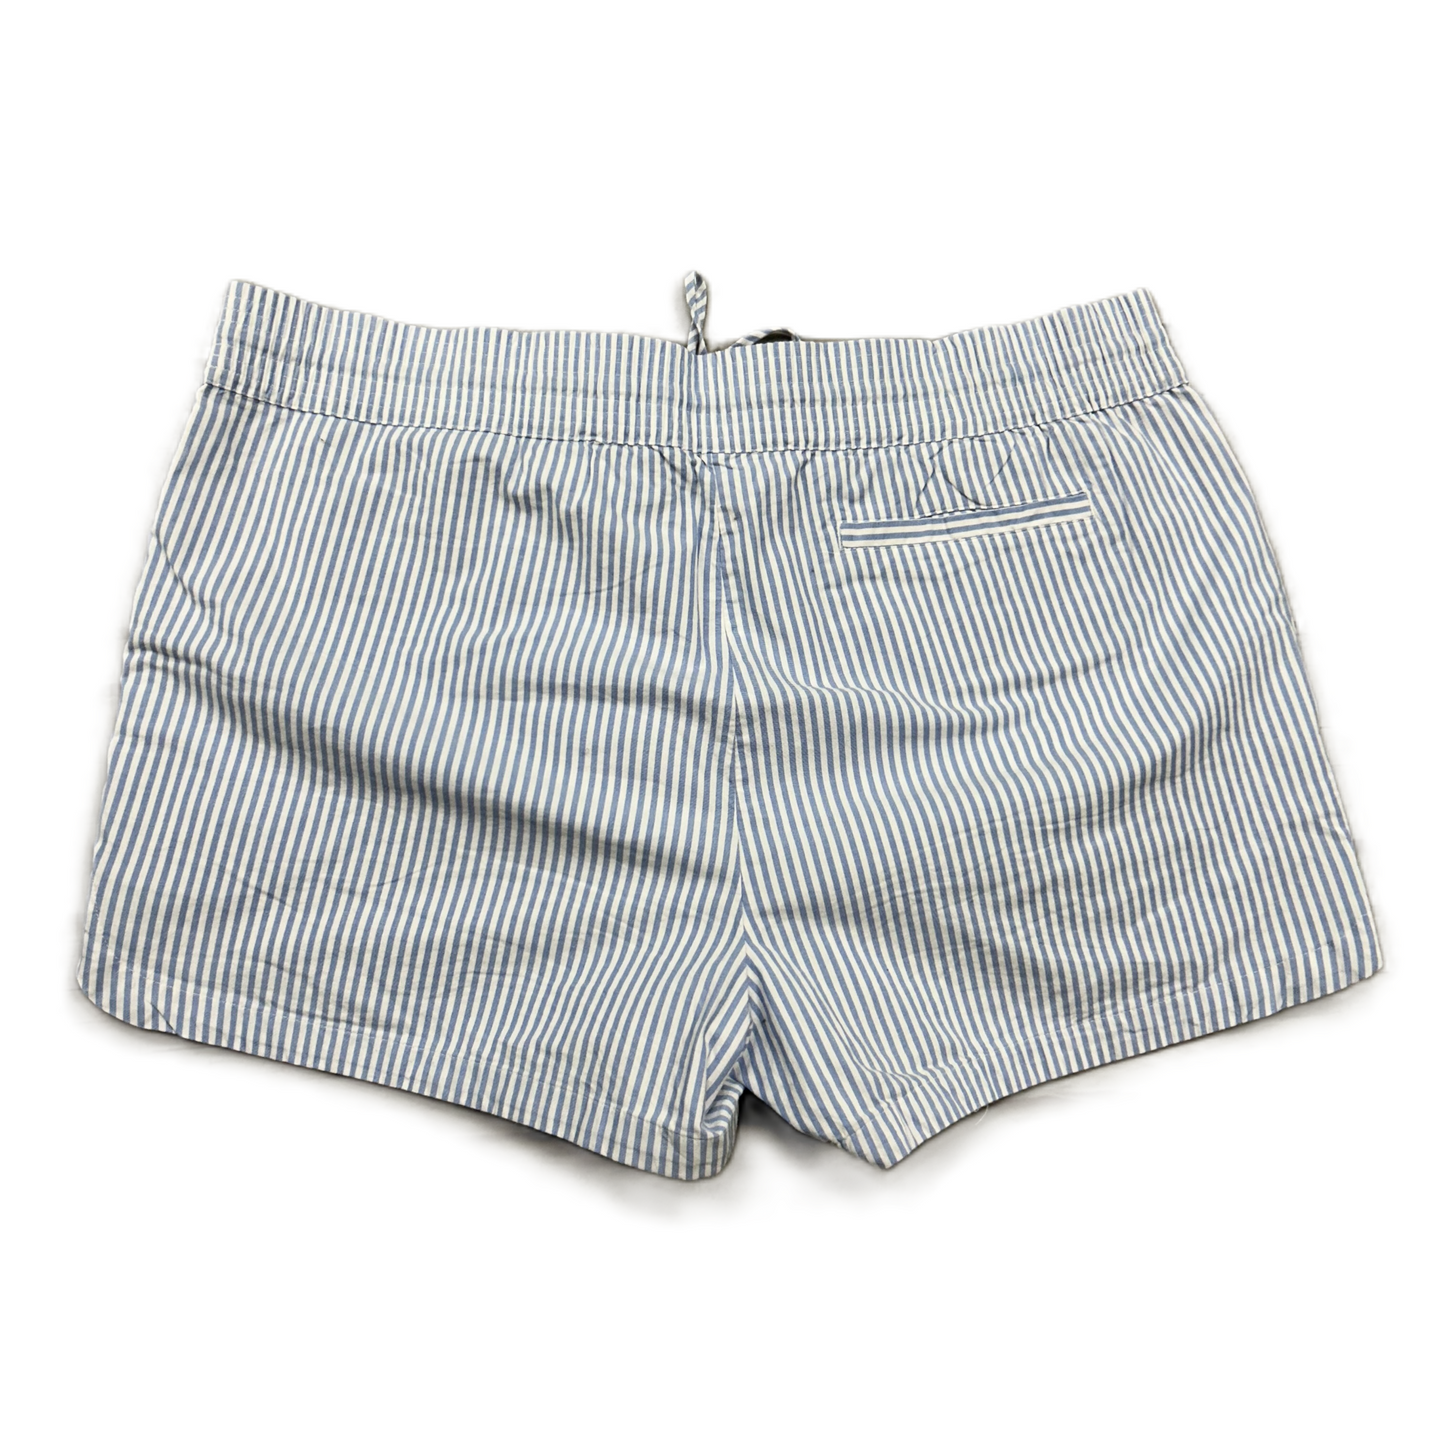 Shorts By Vineyard Vines  Size: Xl